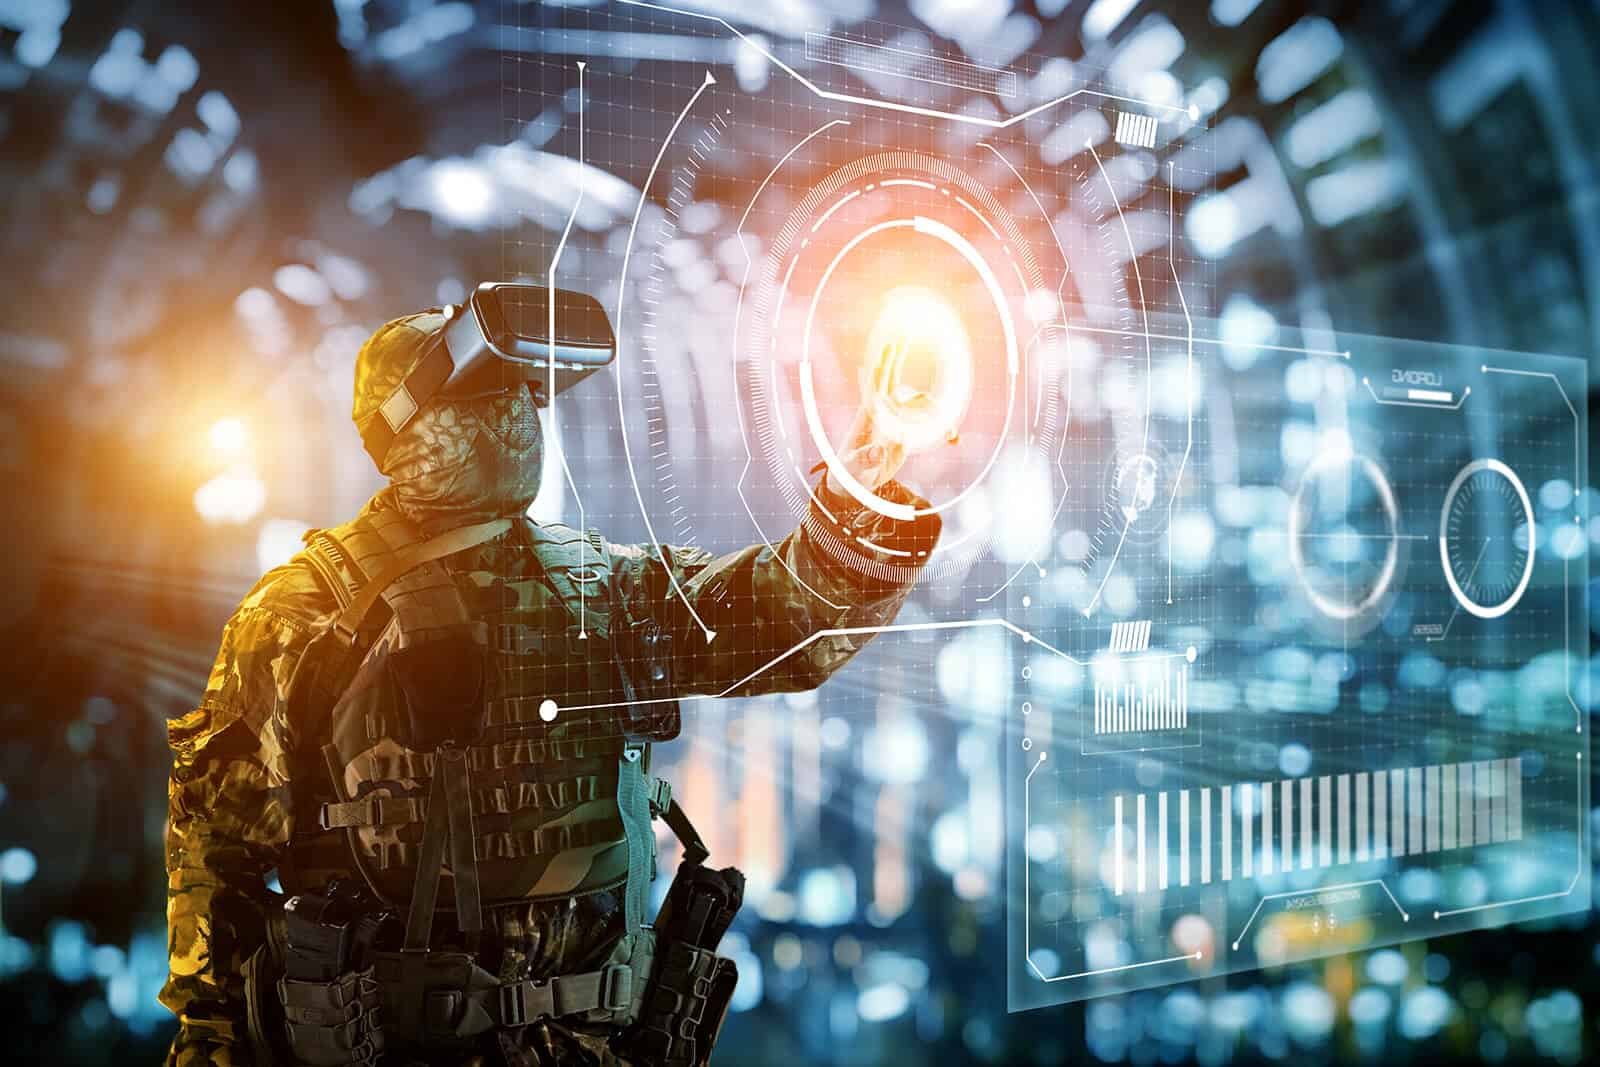 role of artificial intelligence in future warfare essay